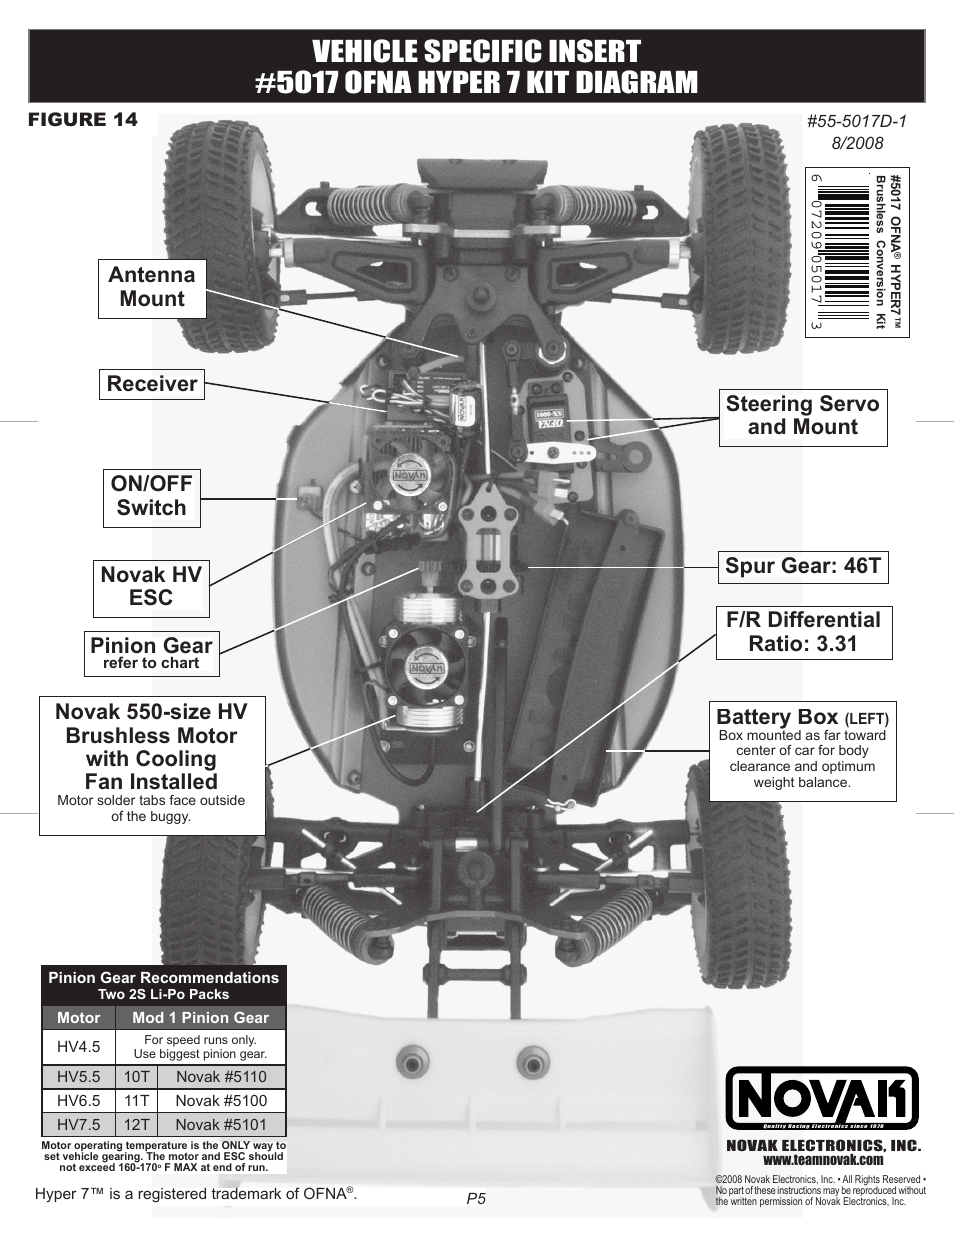 Novak Conv. Kit Vehicle Sheet- OFNA Hyper 7 (55-5017D-1) User Manual | 1 page